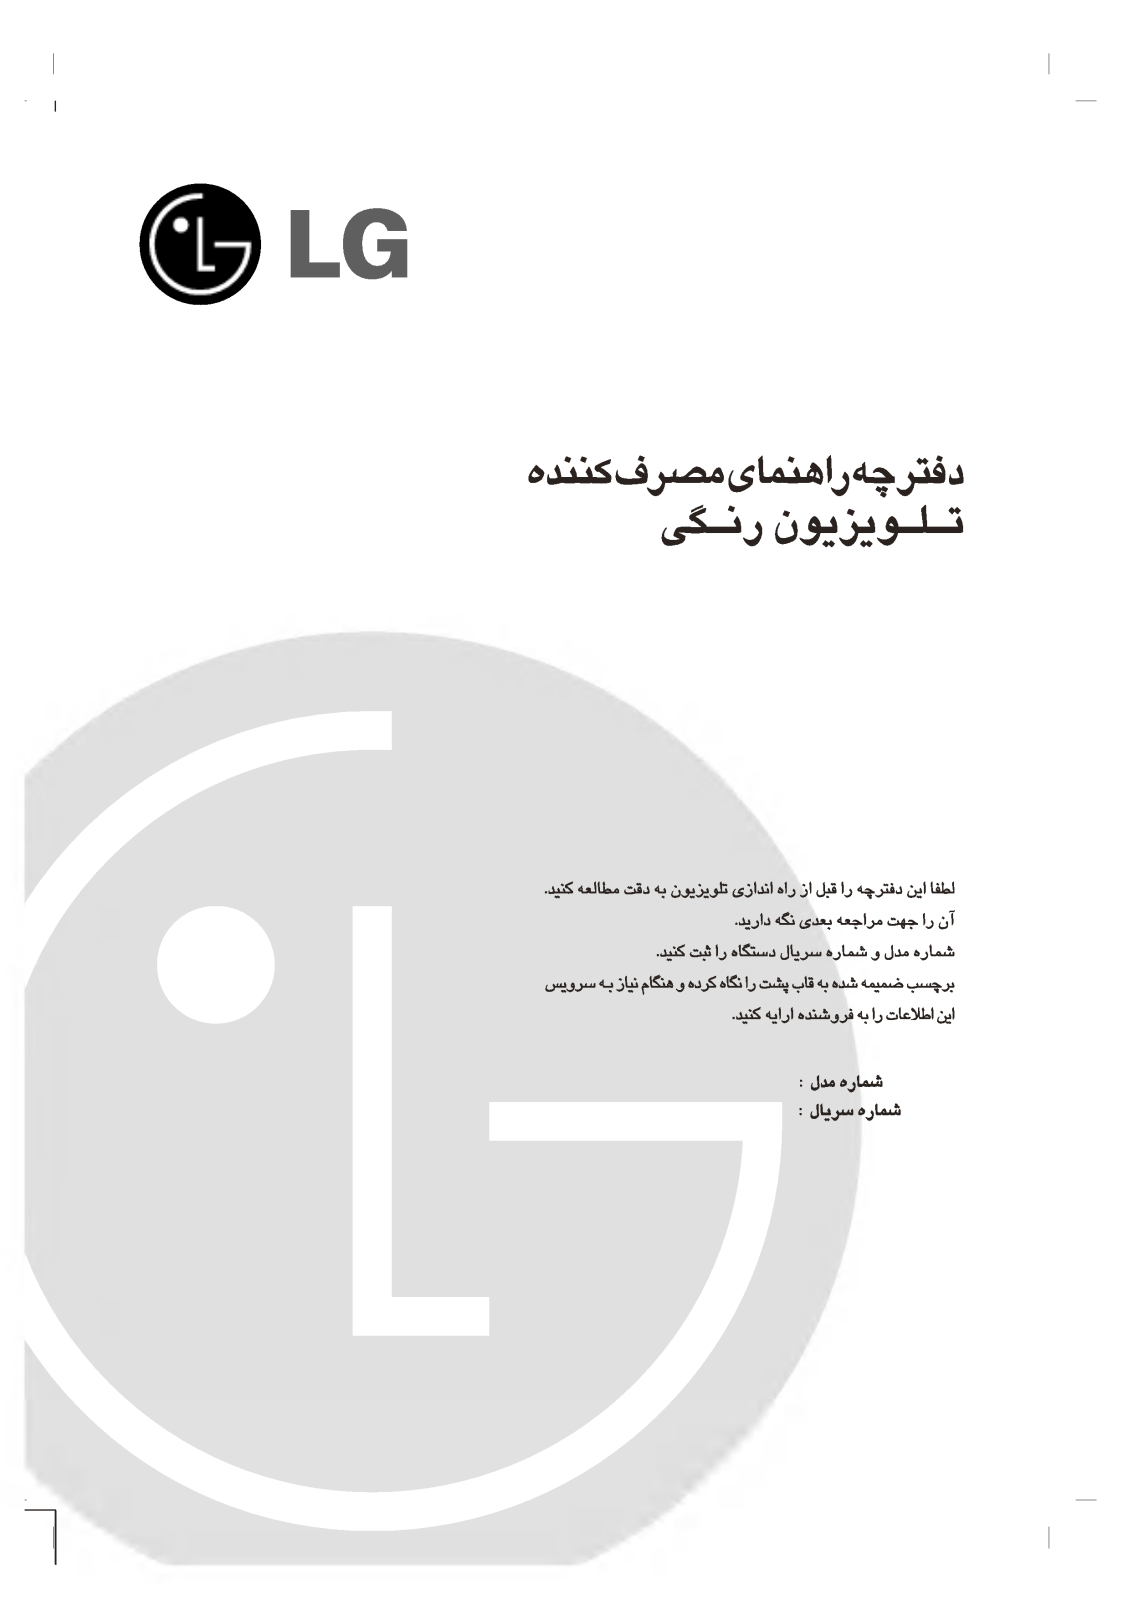 LG RT-21CC25VX Owner’s Manual